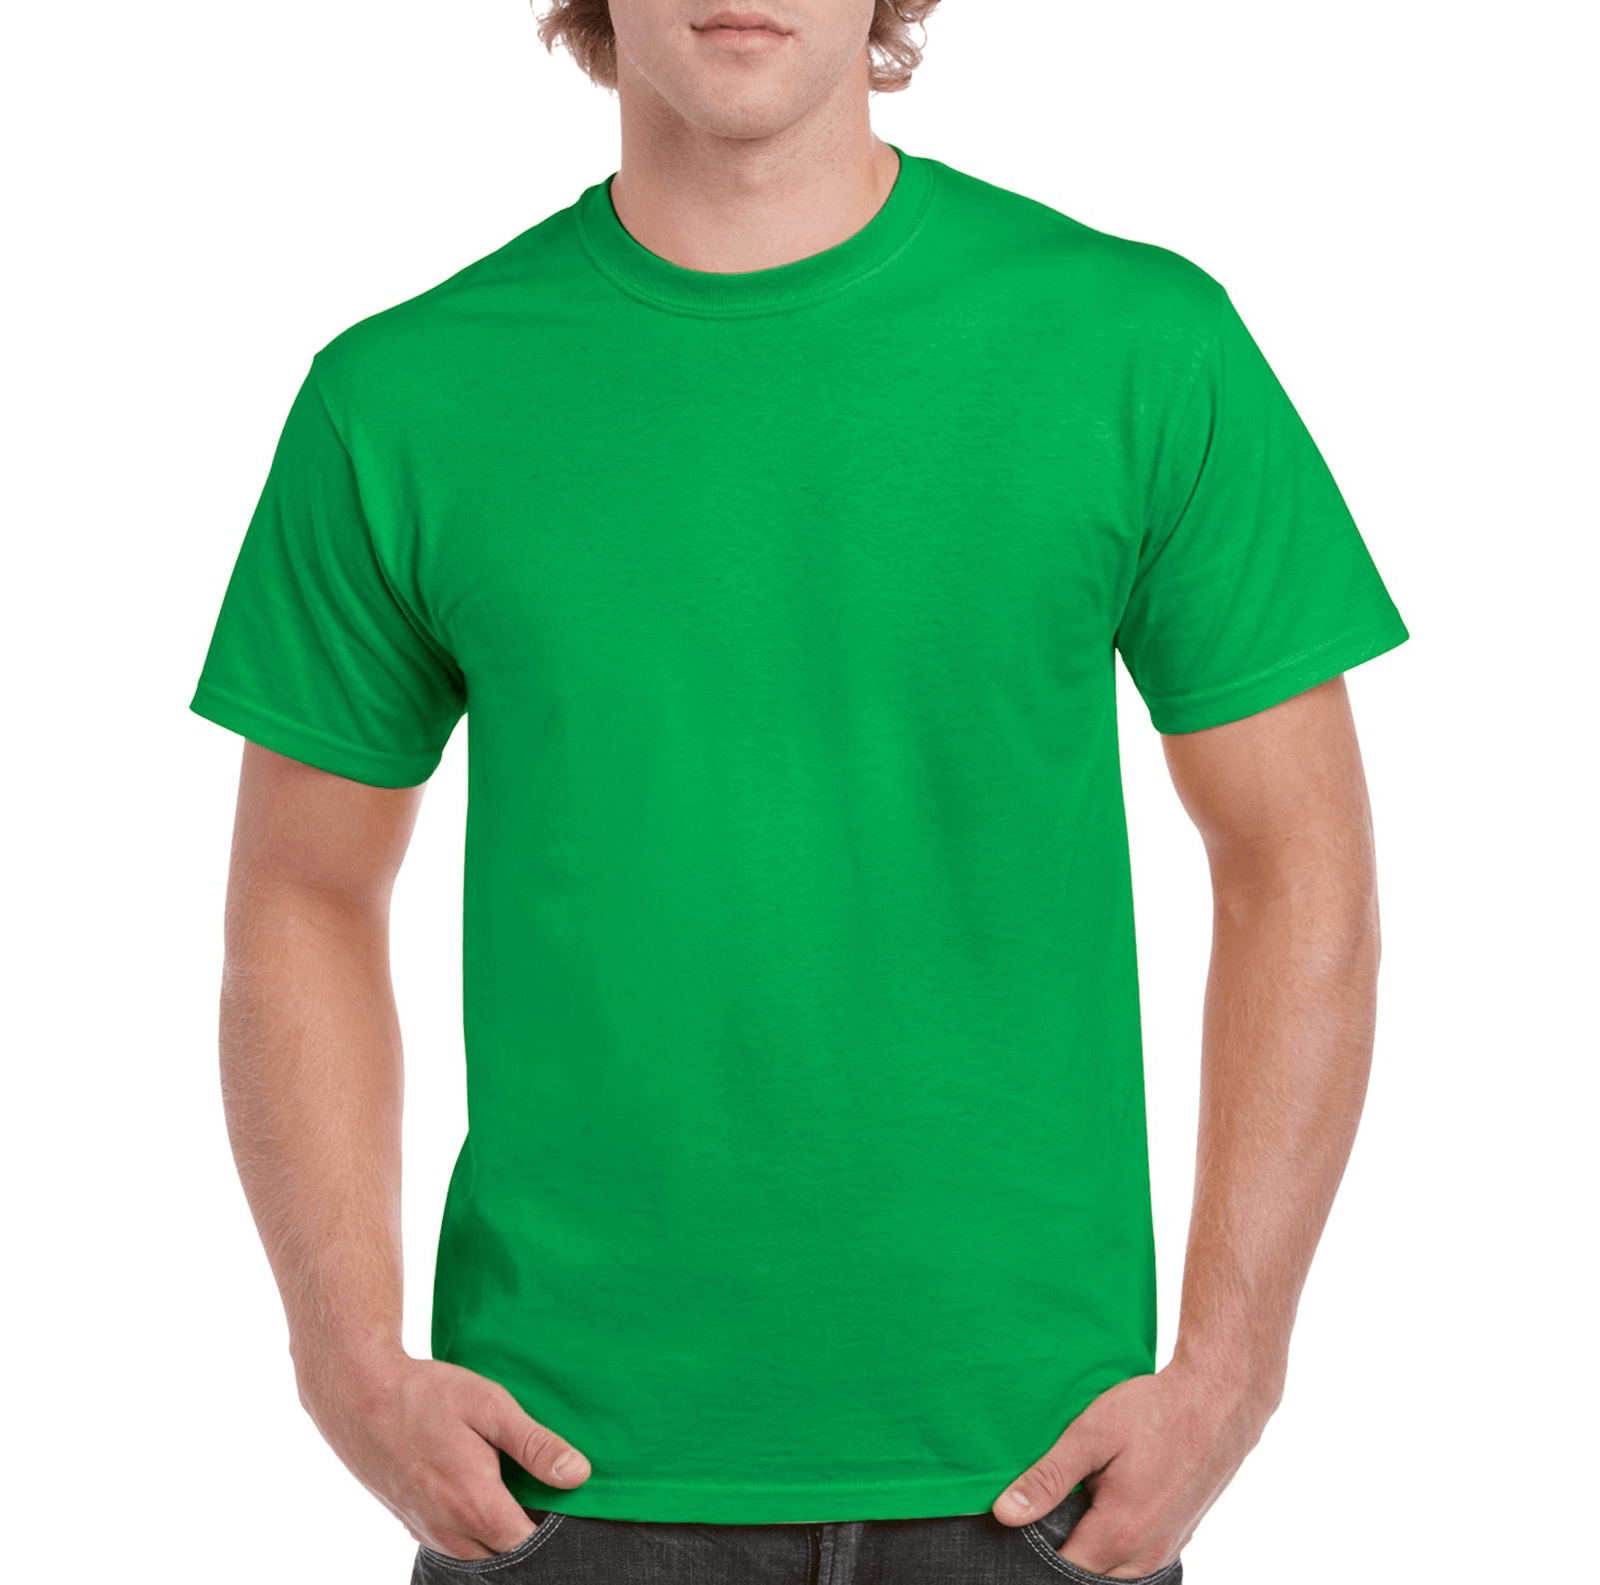 Softex Plain Shirt-Best For Tshirt Printing (Color: Emerald Green ...